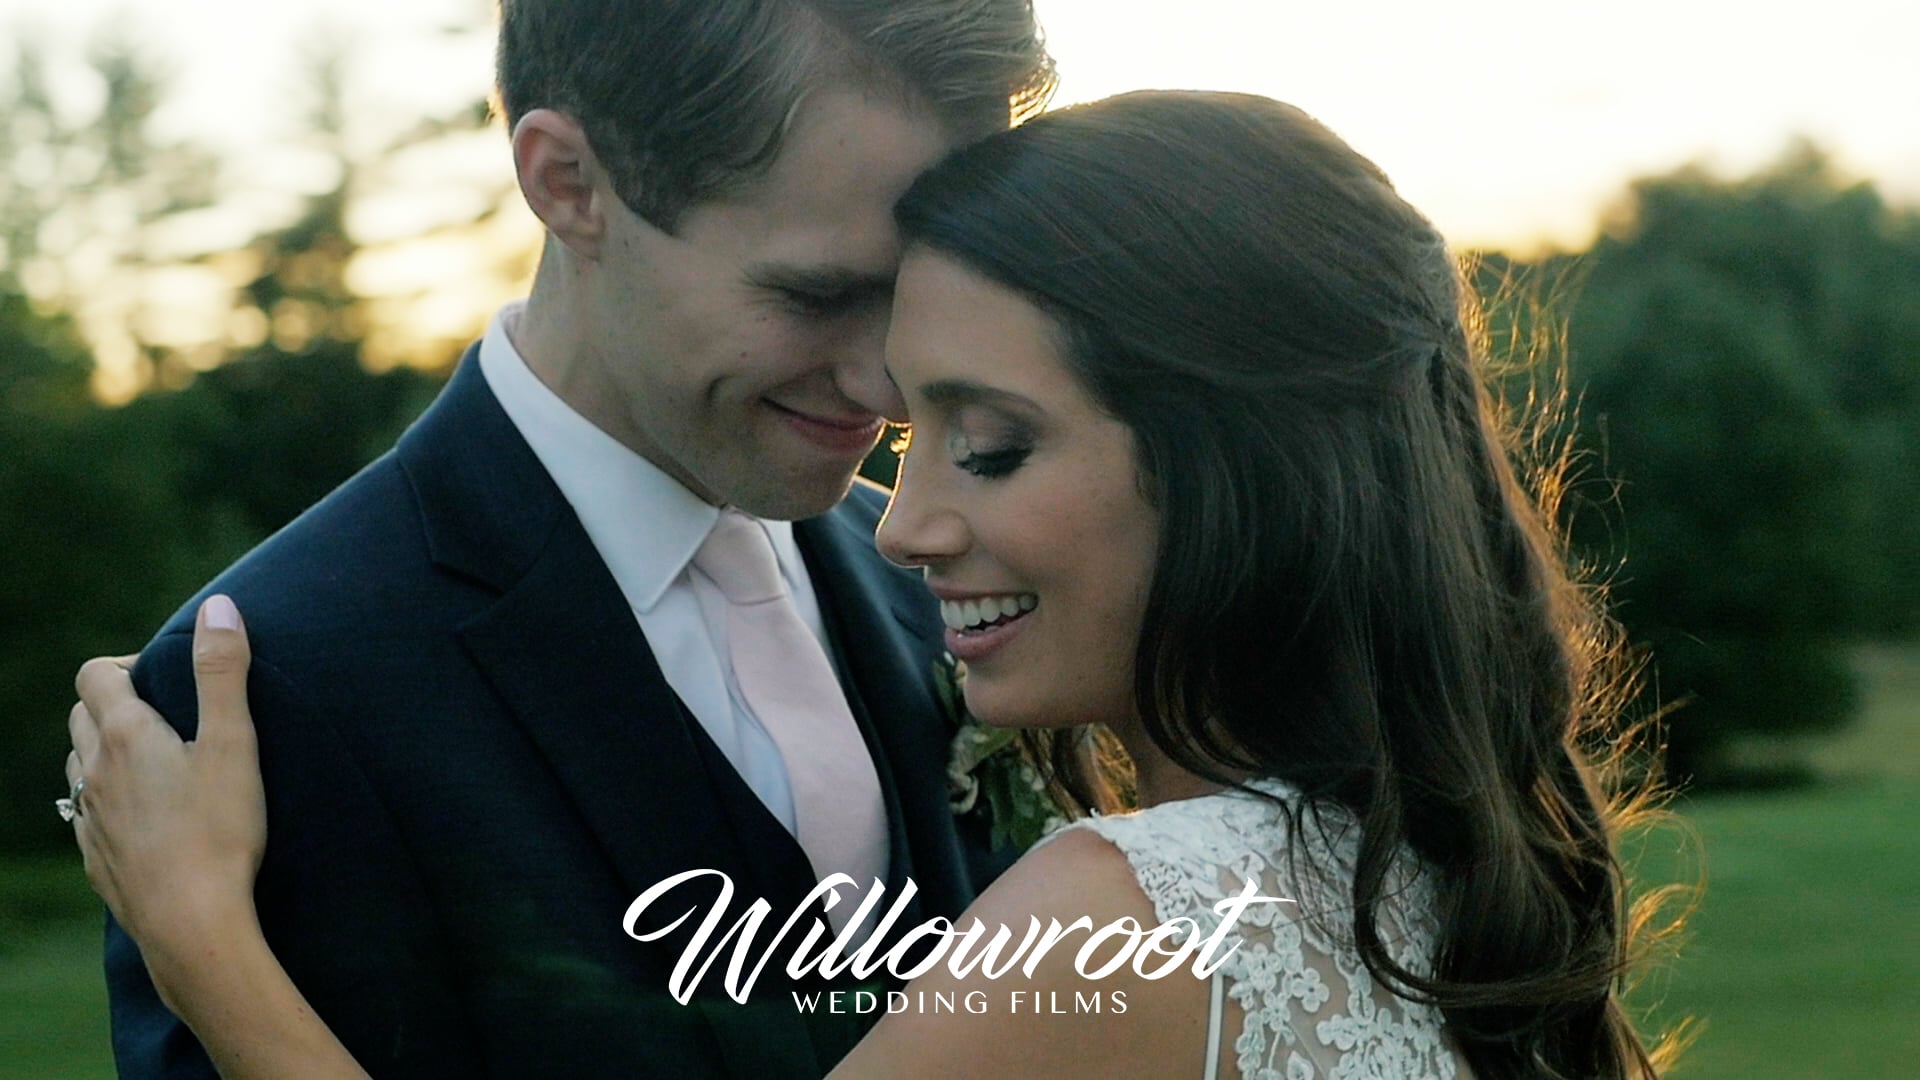 Kim & Kyle // Willowroot Wedding Films